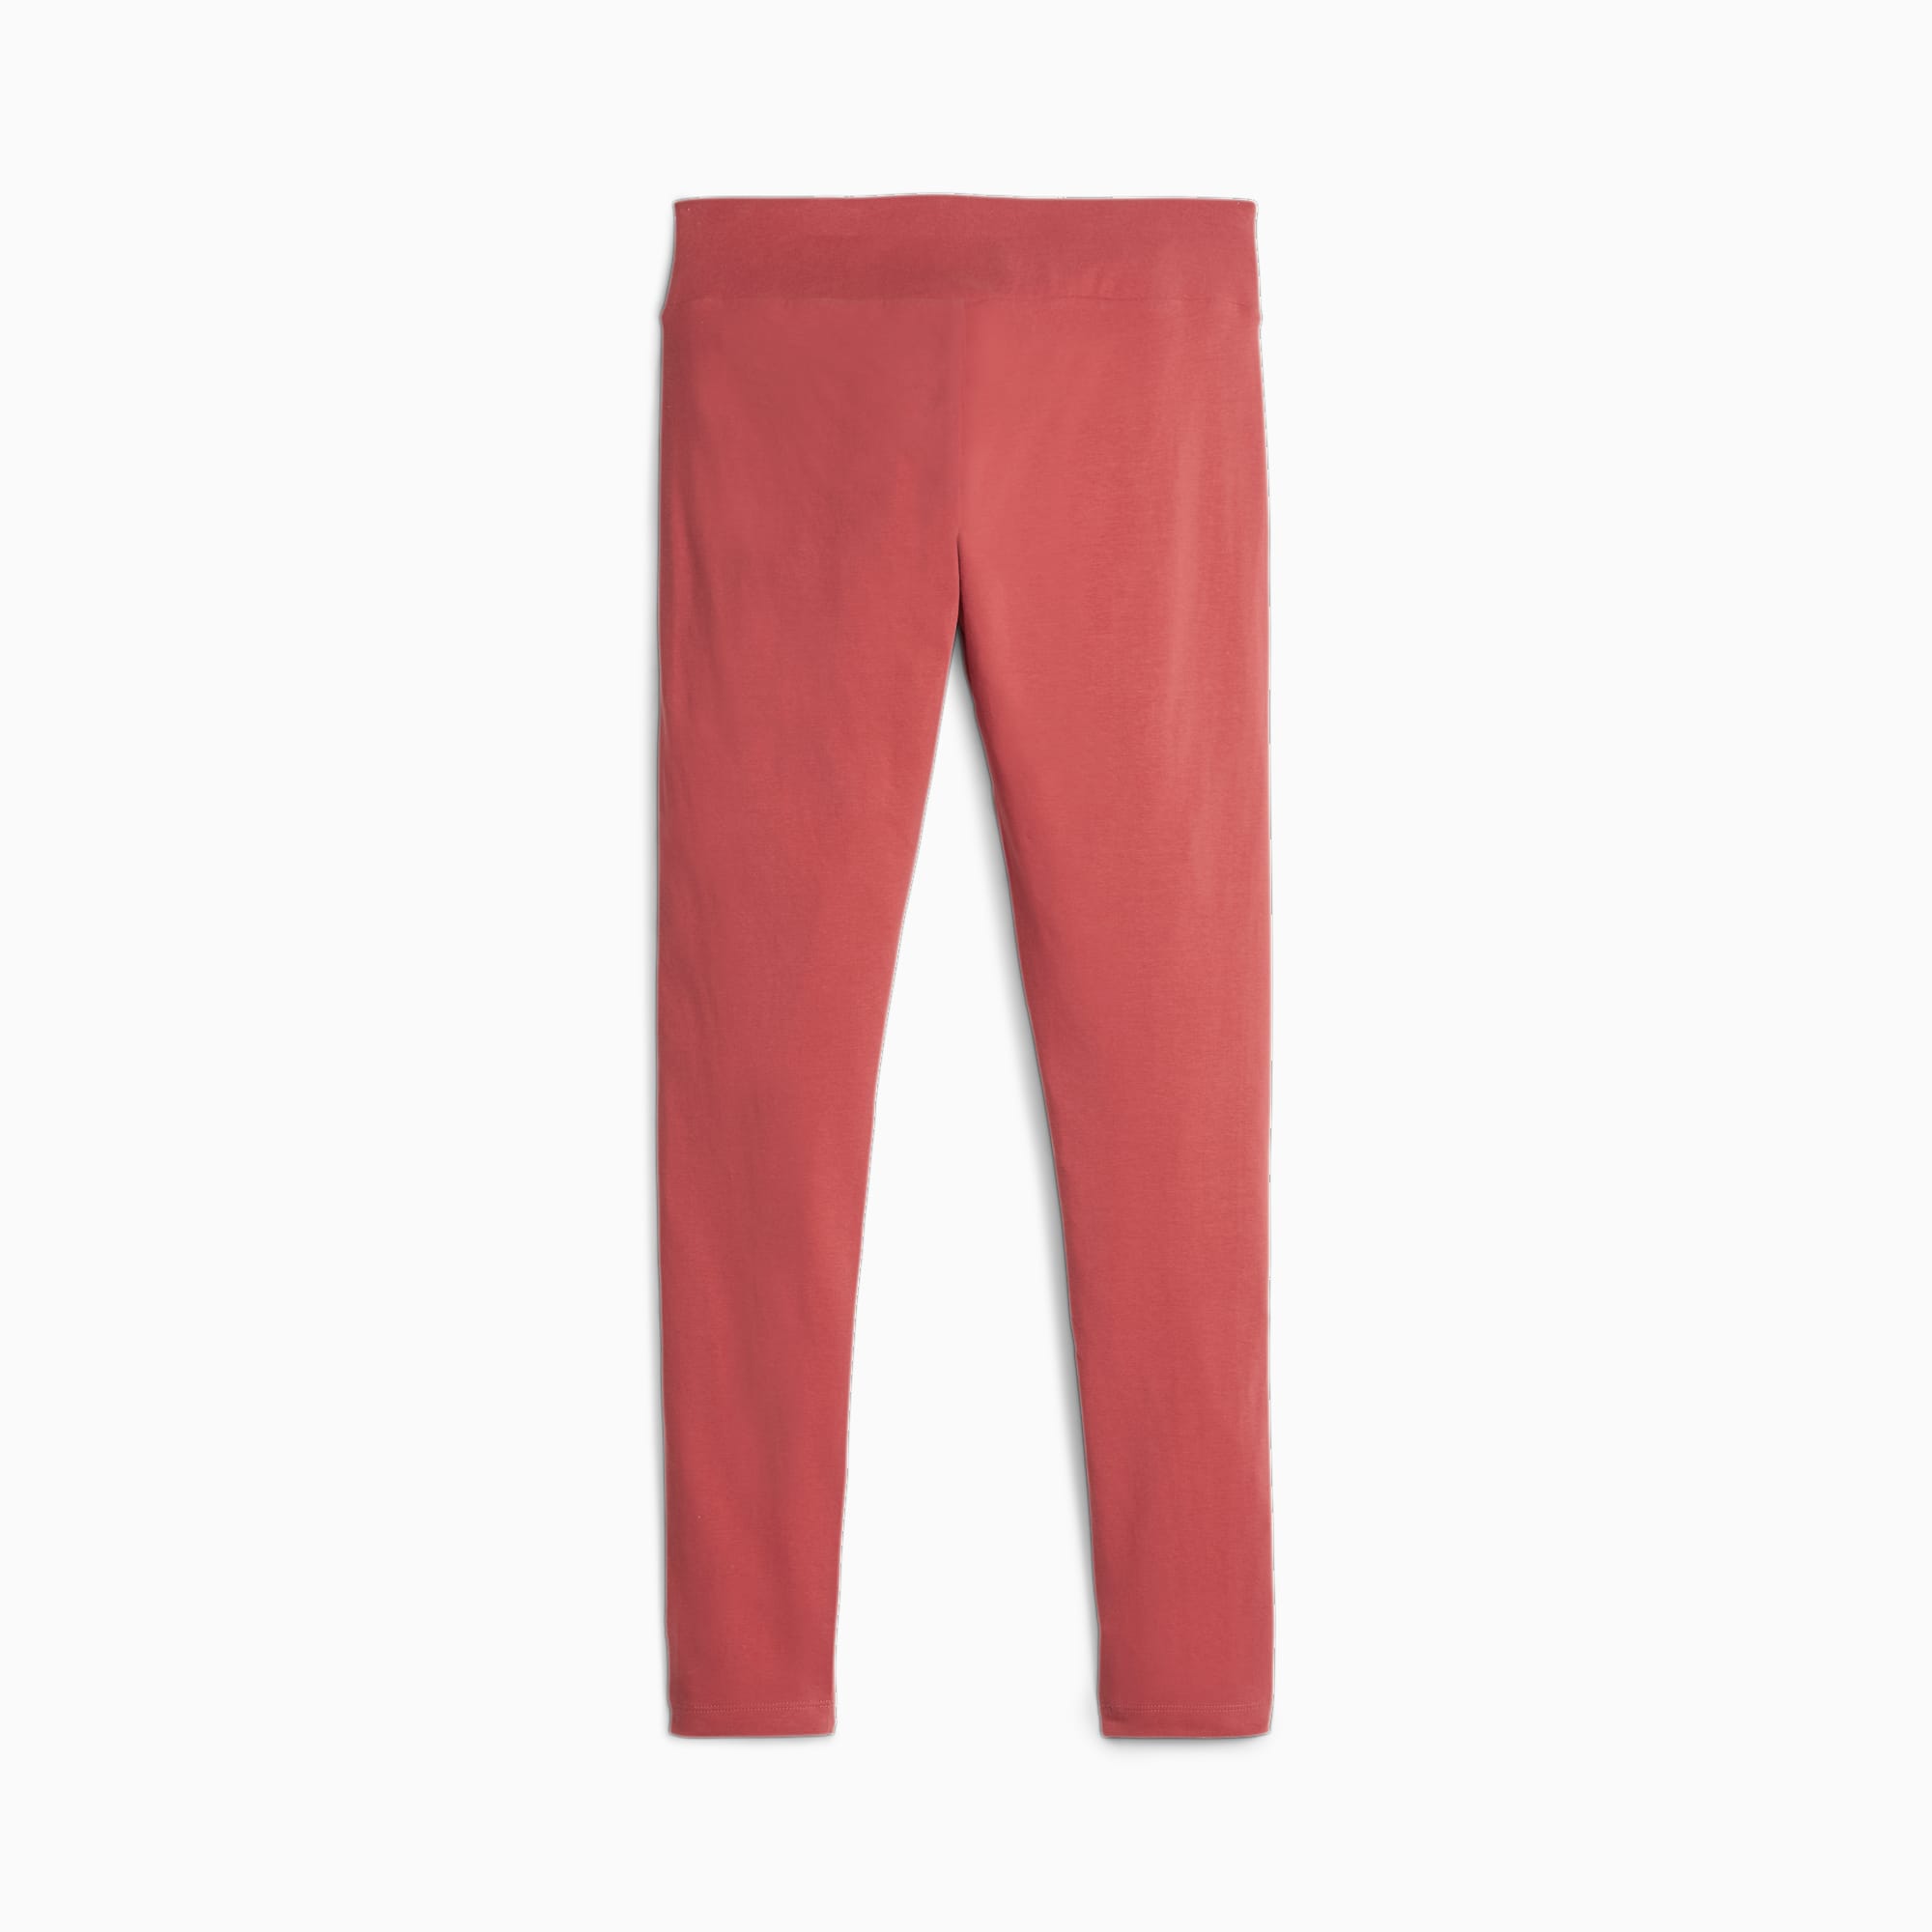 PUMA Ess+ Minimal Gold Women's Leggings, Astro Red, Size XL, Clothing